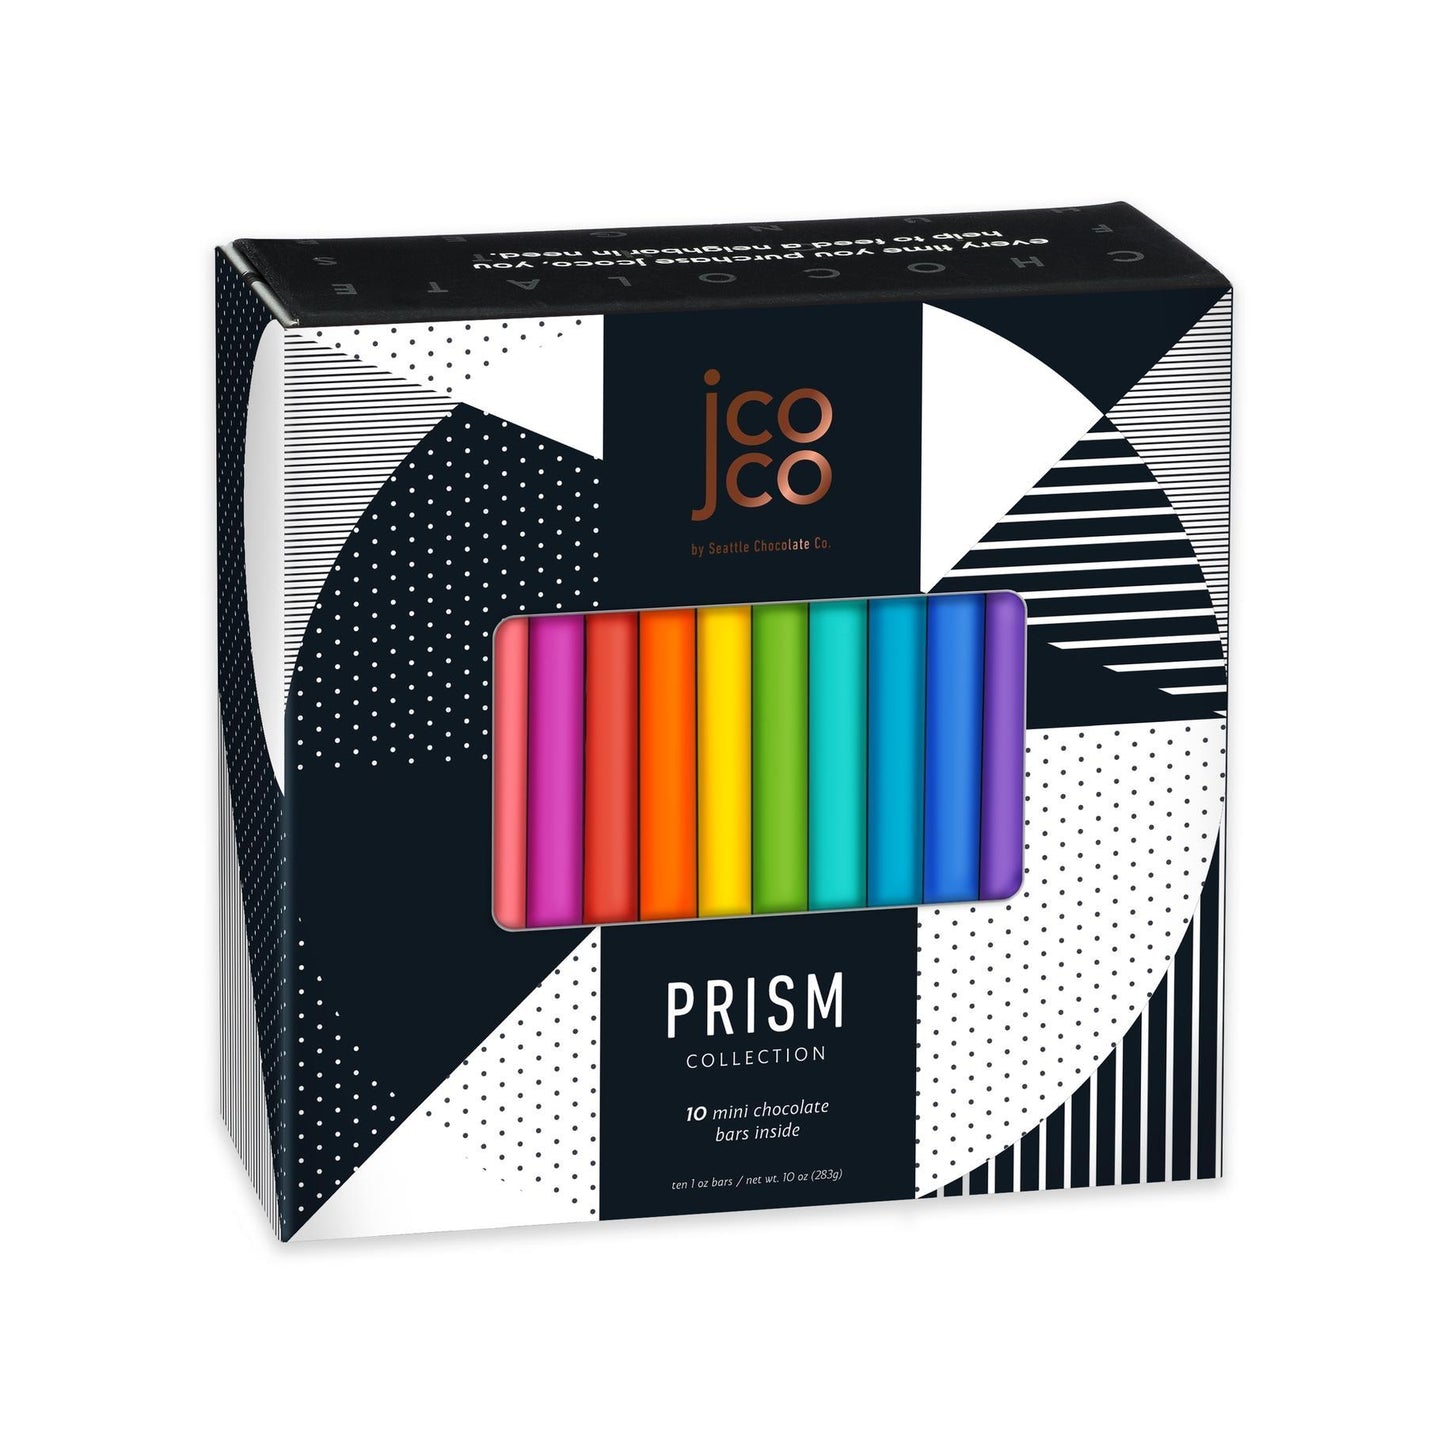 jcoco Chocolate - 'PRISM Collection' Chocolate Bars (10x1OZ)